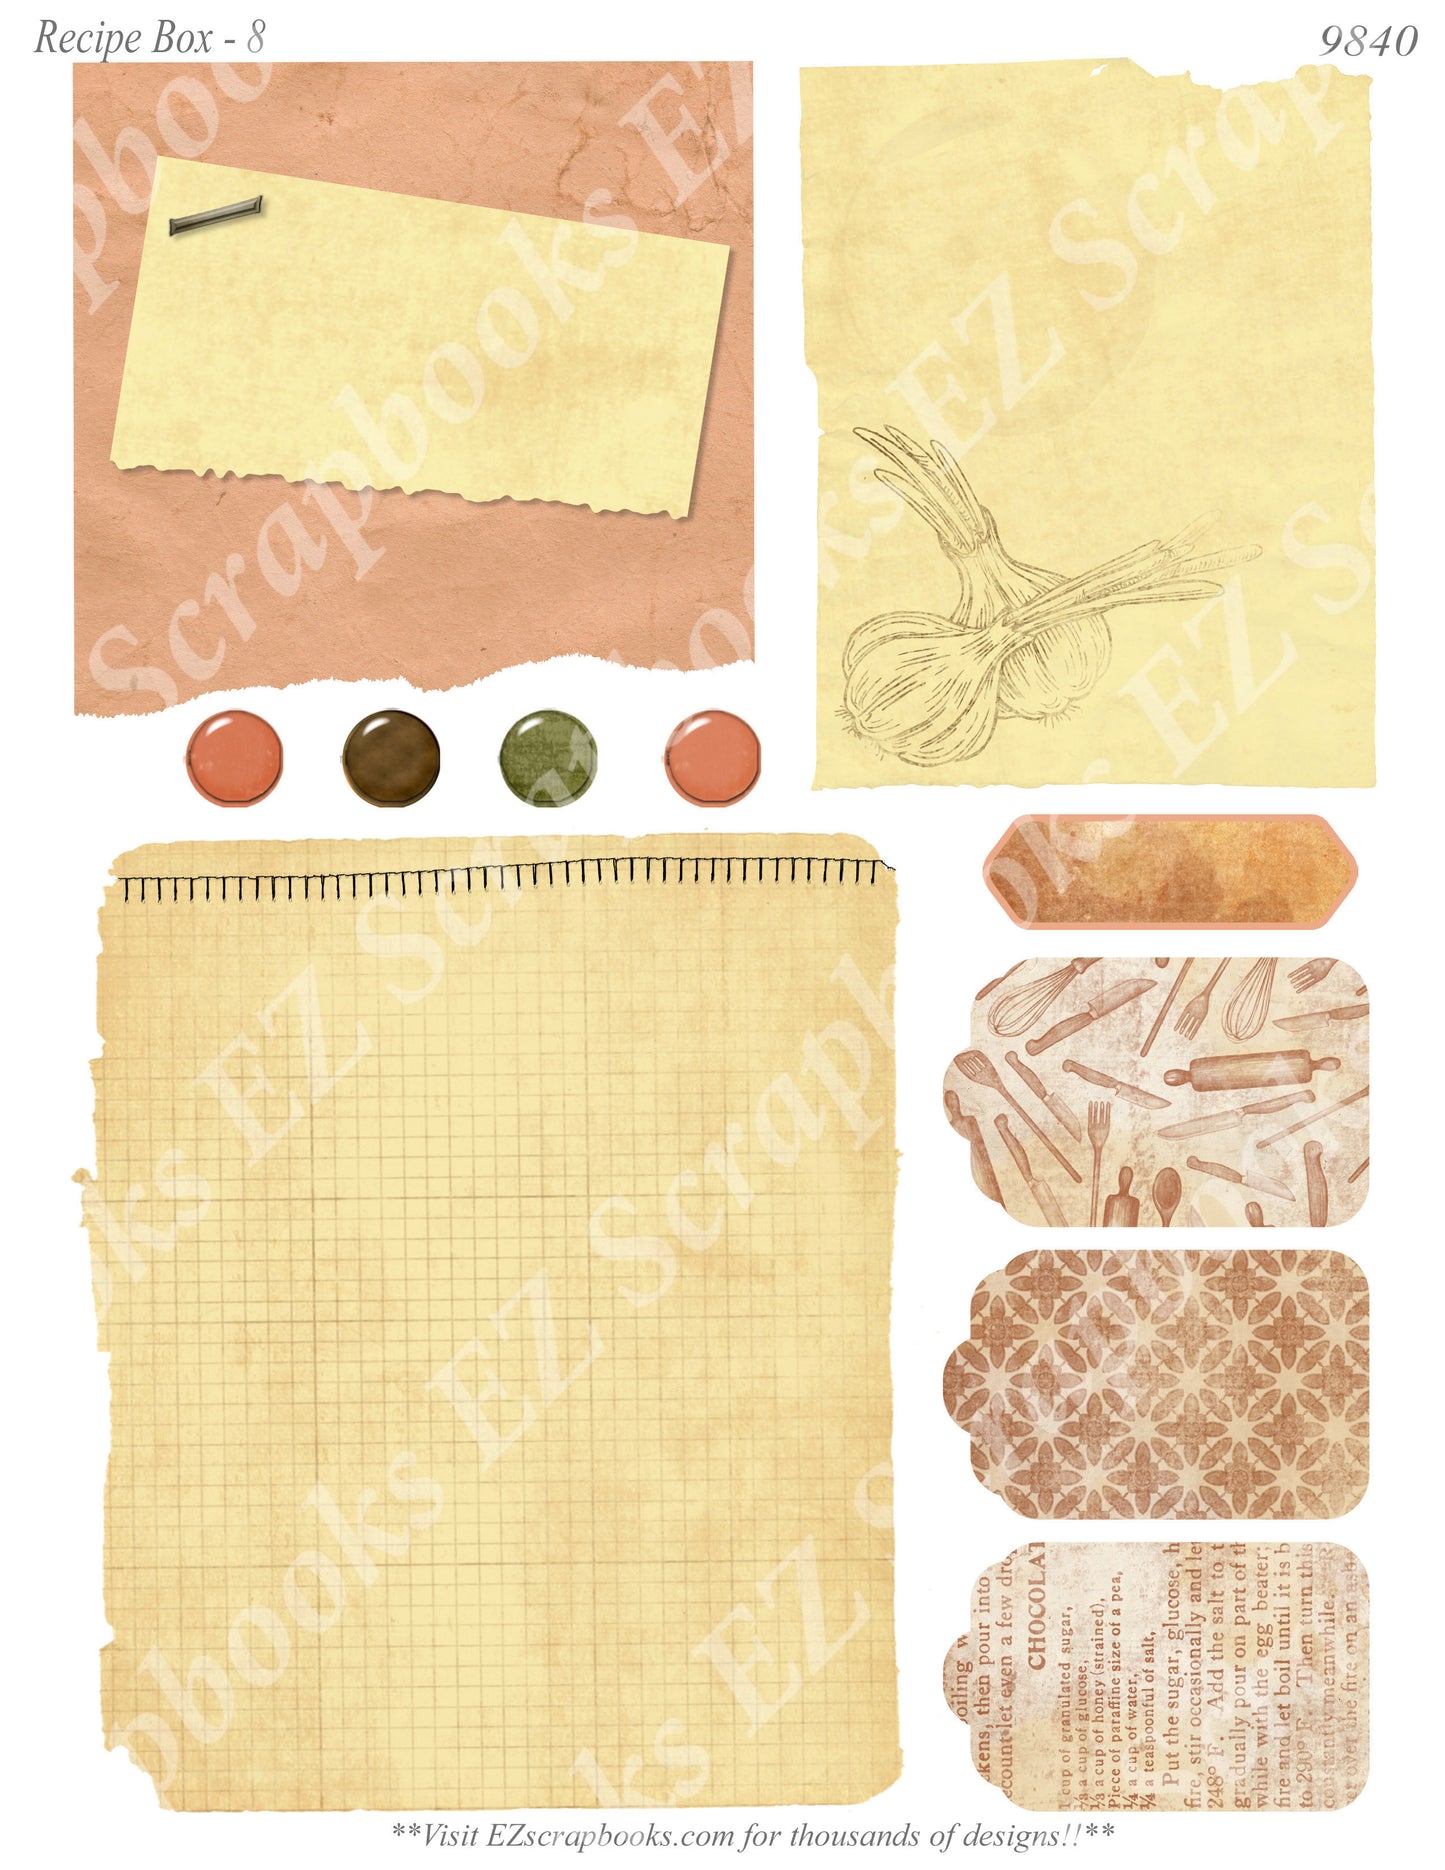 Recipe Box - Embellishments - 8 - 9840